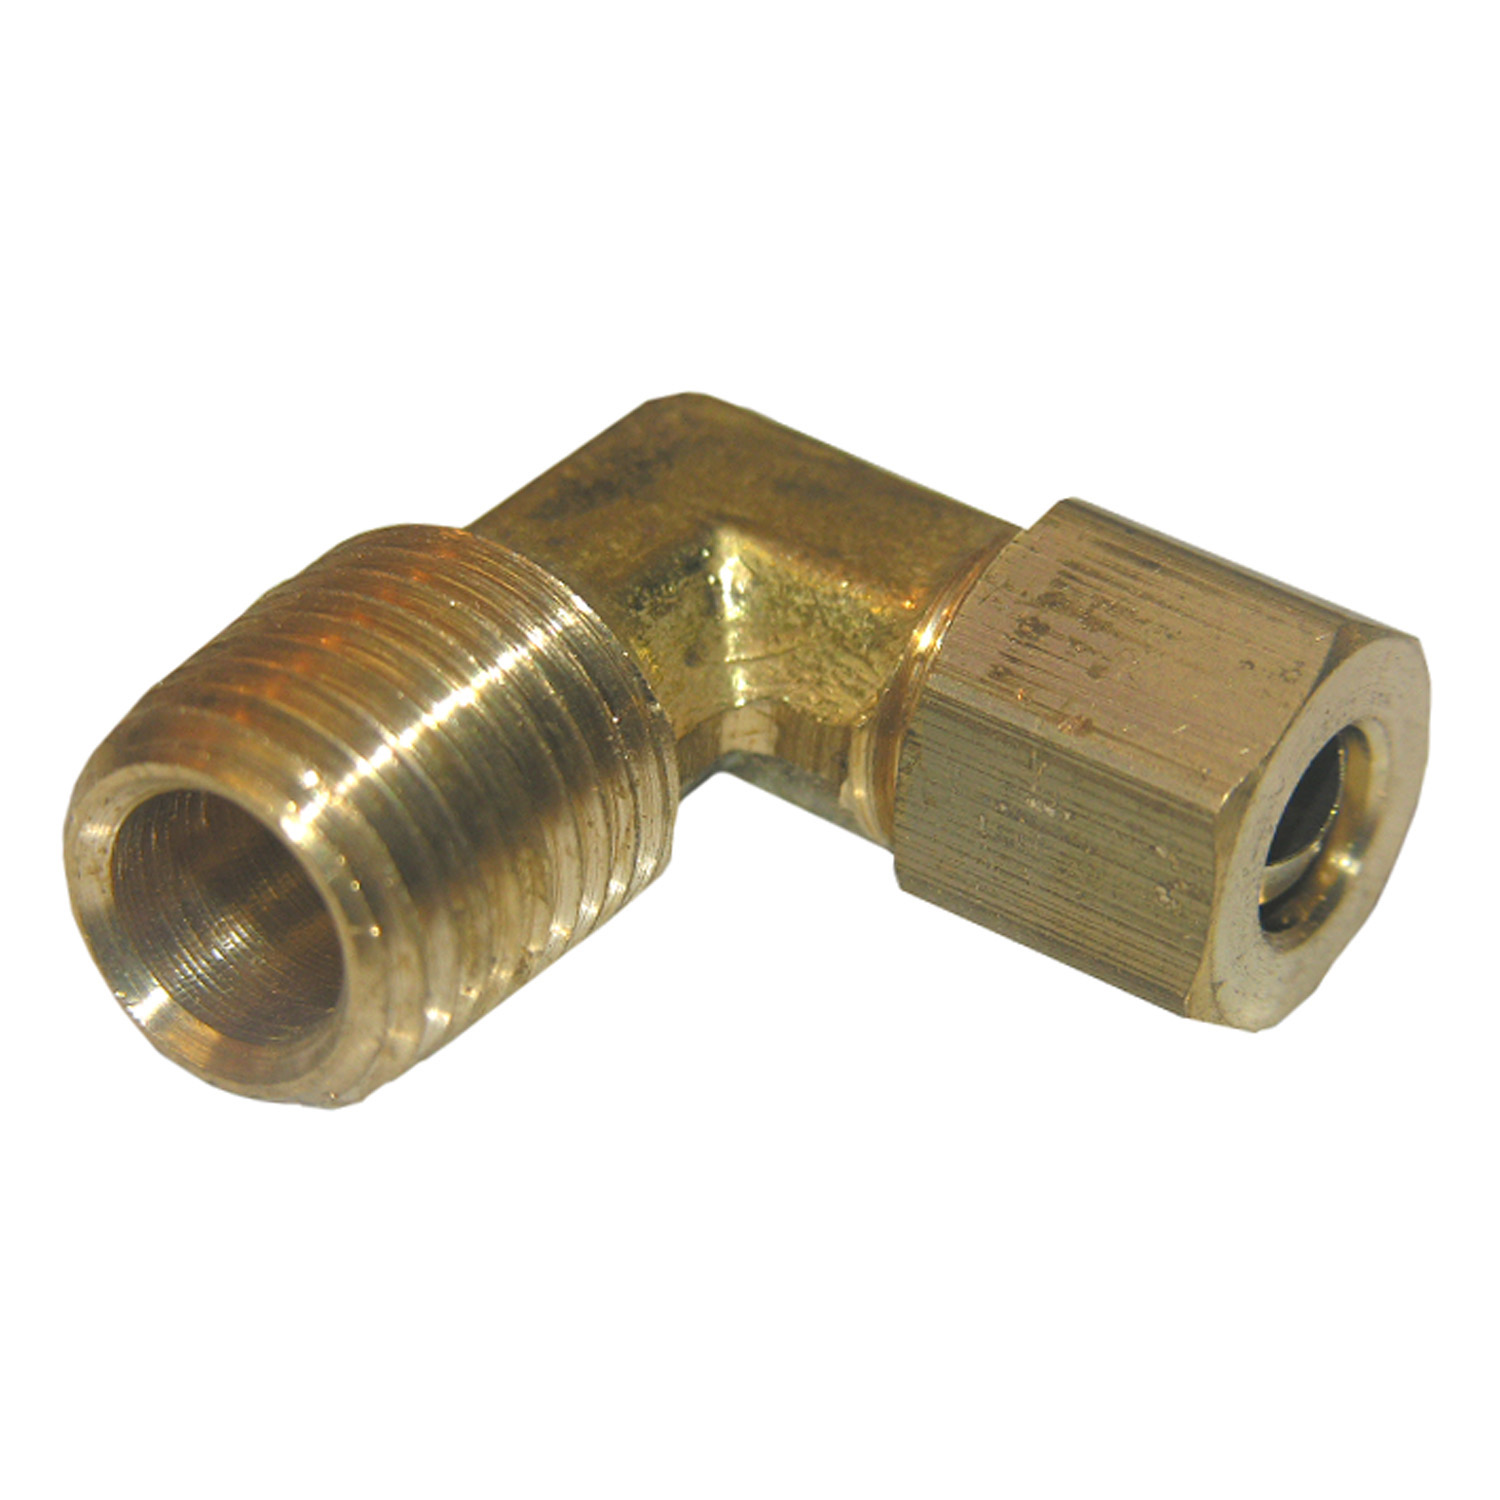 17-6911 Pipe Elbow, 1/4 in, Compression x MIP, 90 deg Angle, Brass, 150 psi Pressure